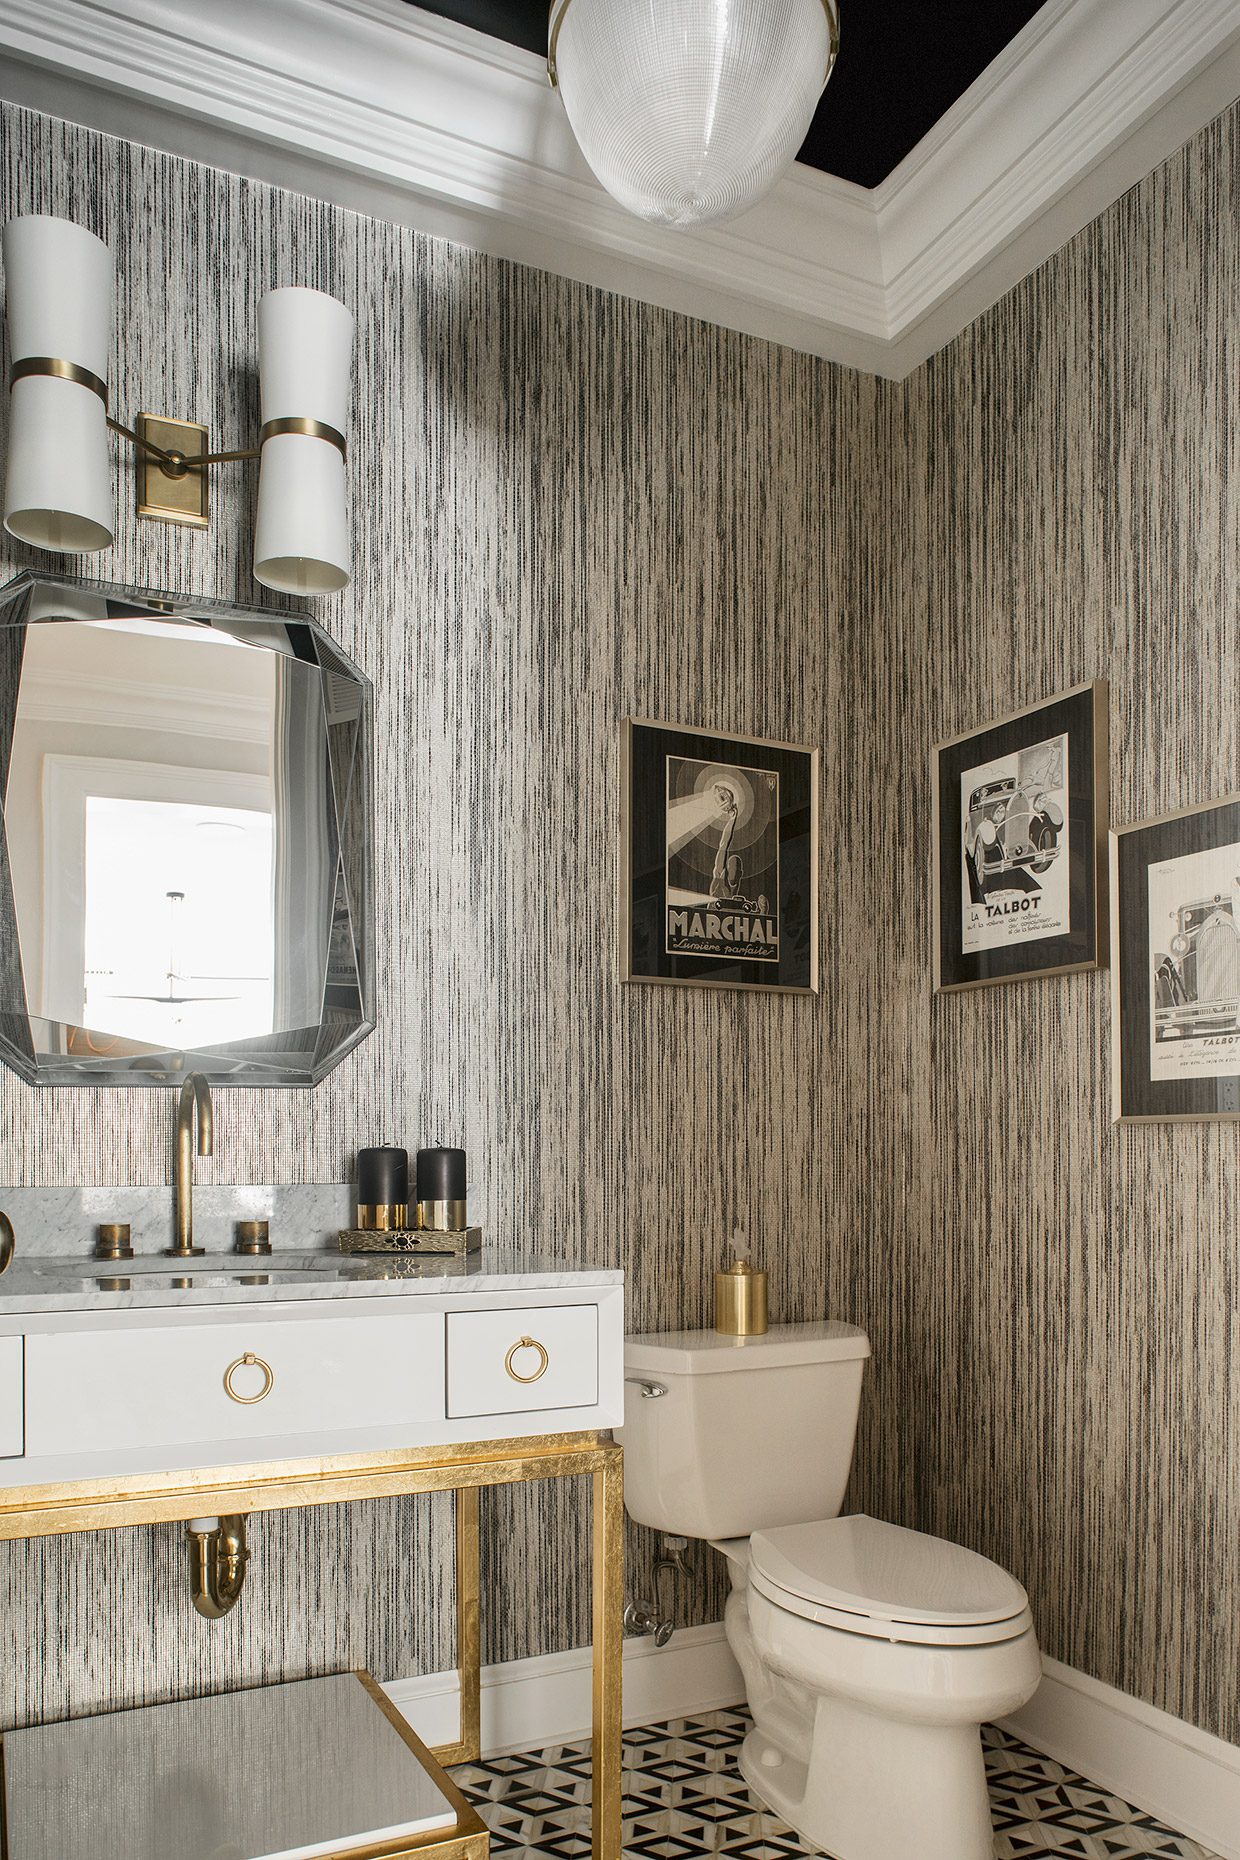 Bathroom Feature Wallpaper Ideas - BEST HOME DESIGN IDEAS